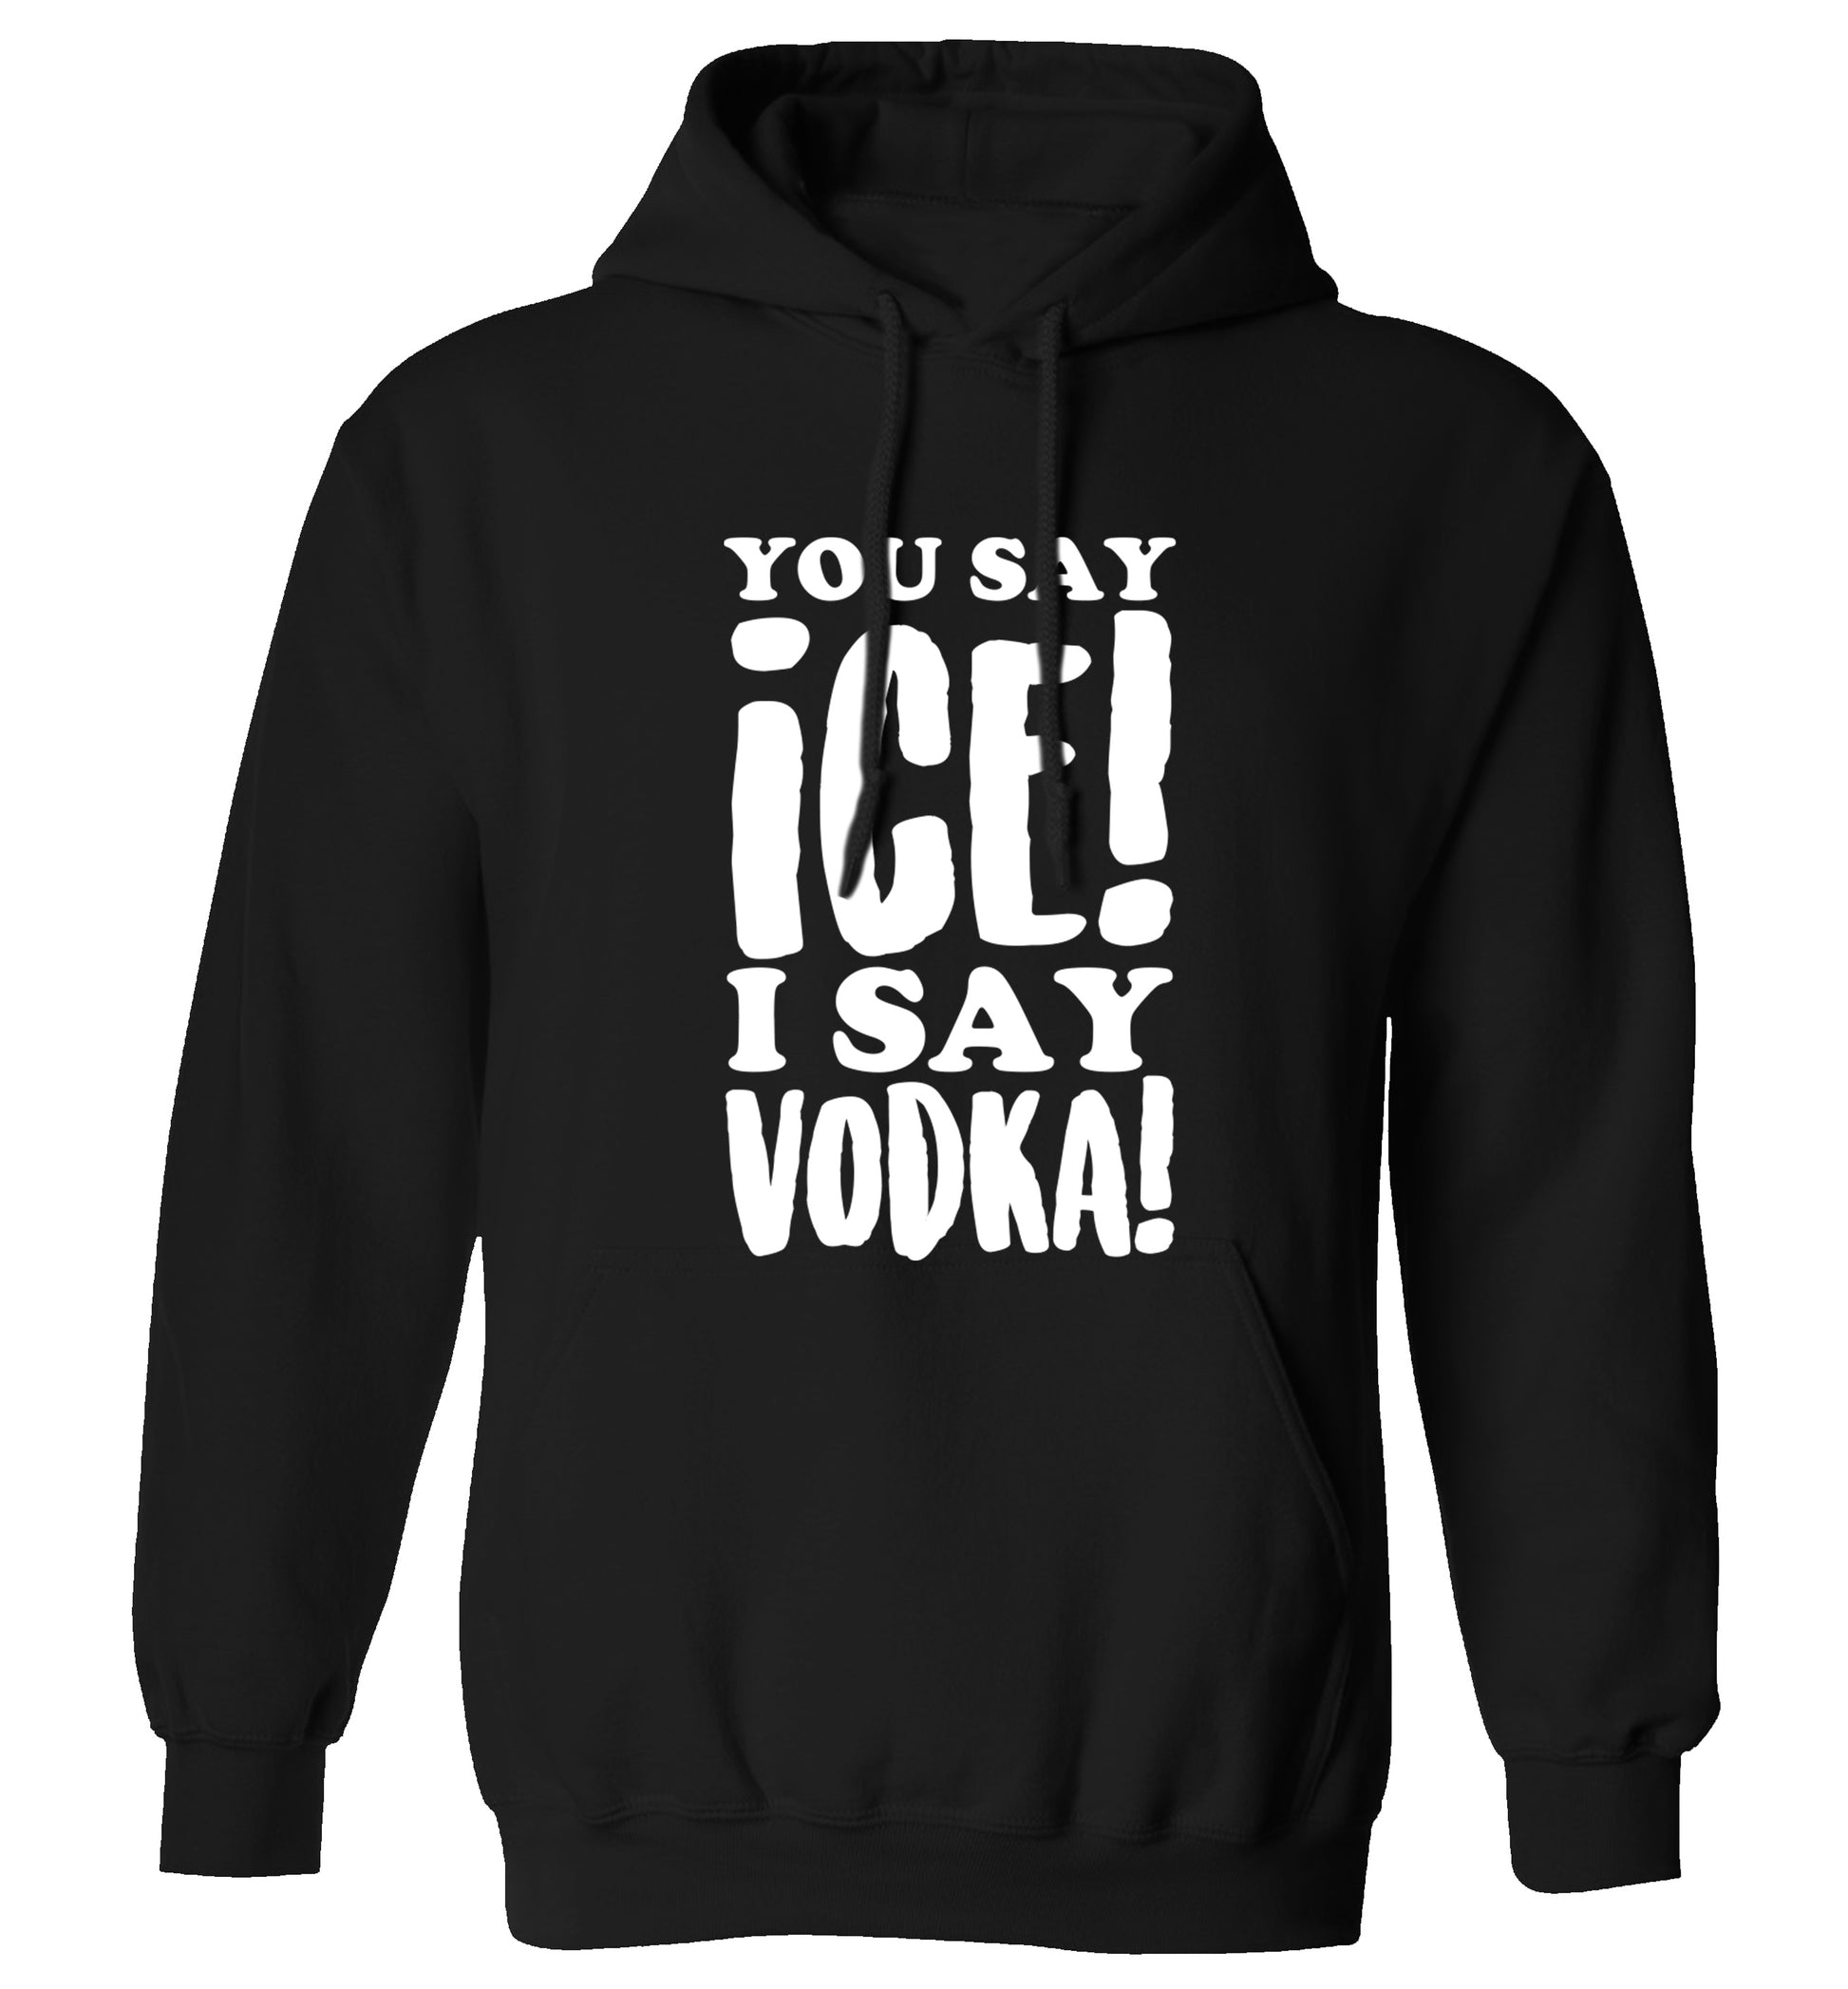 You say ice I say vodka! adults unisex black hoodie 2XL